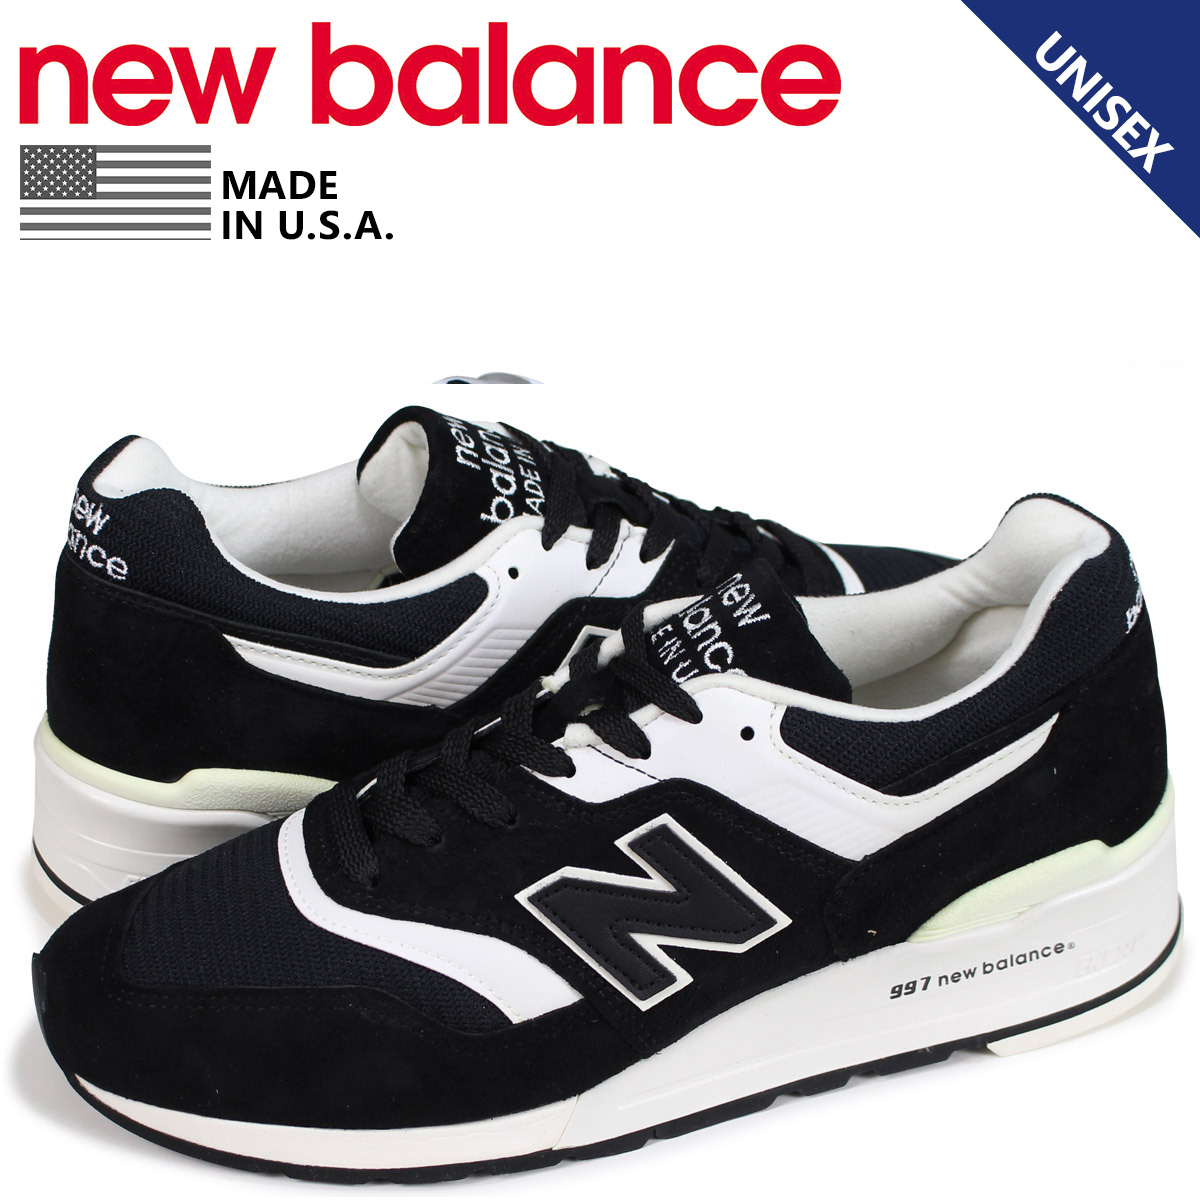 new balance sneakers online